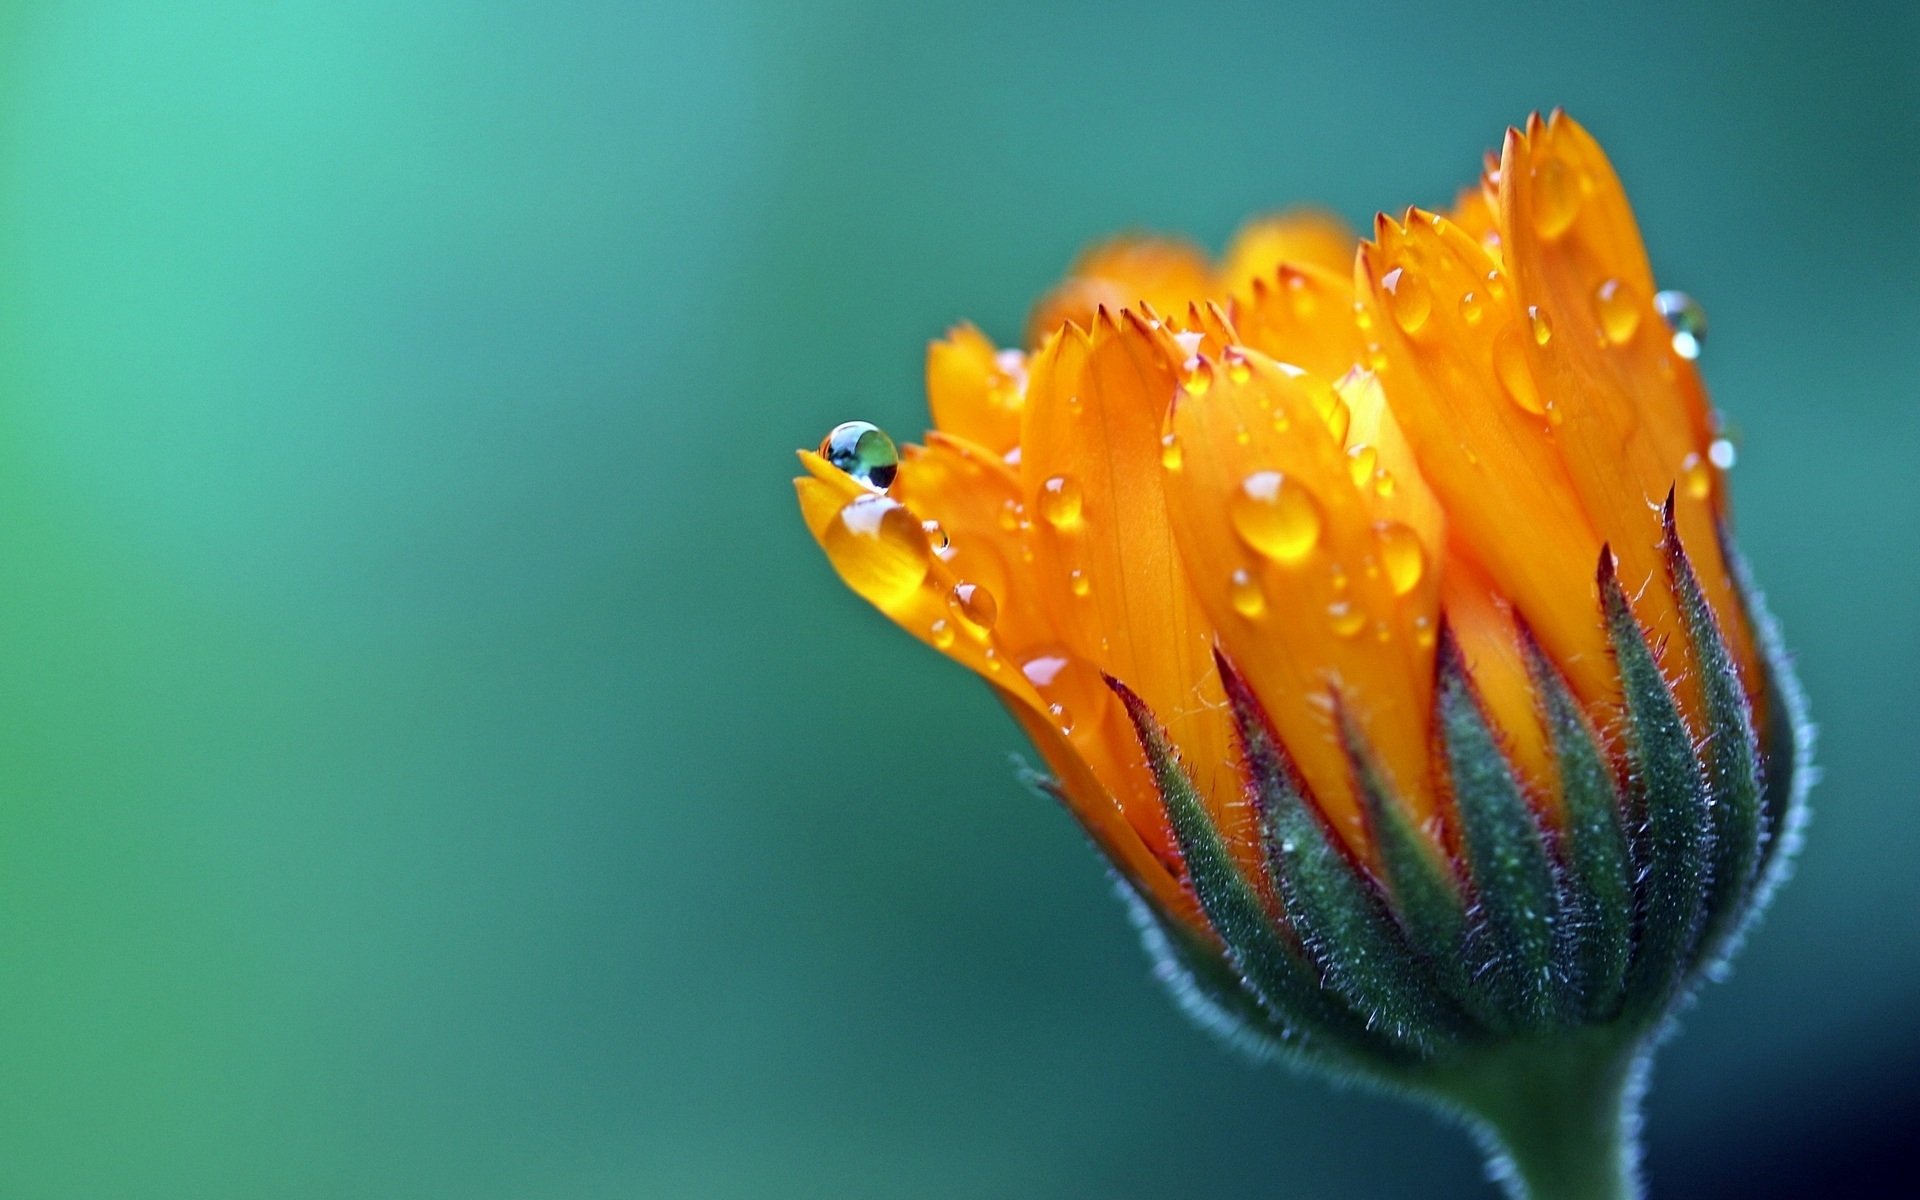 Yellow Flower by Myriams-Fotos